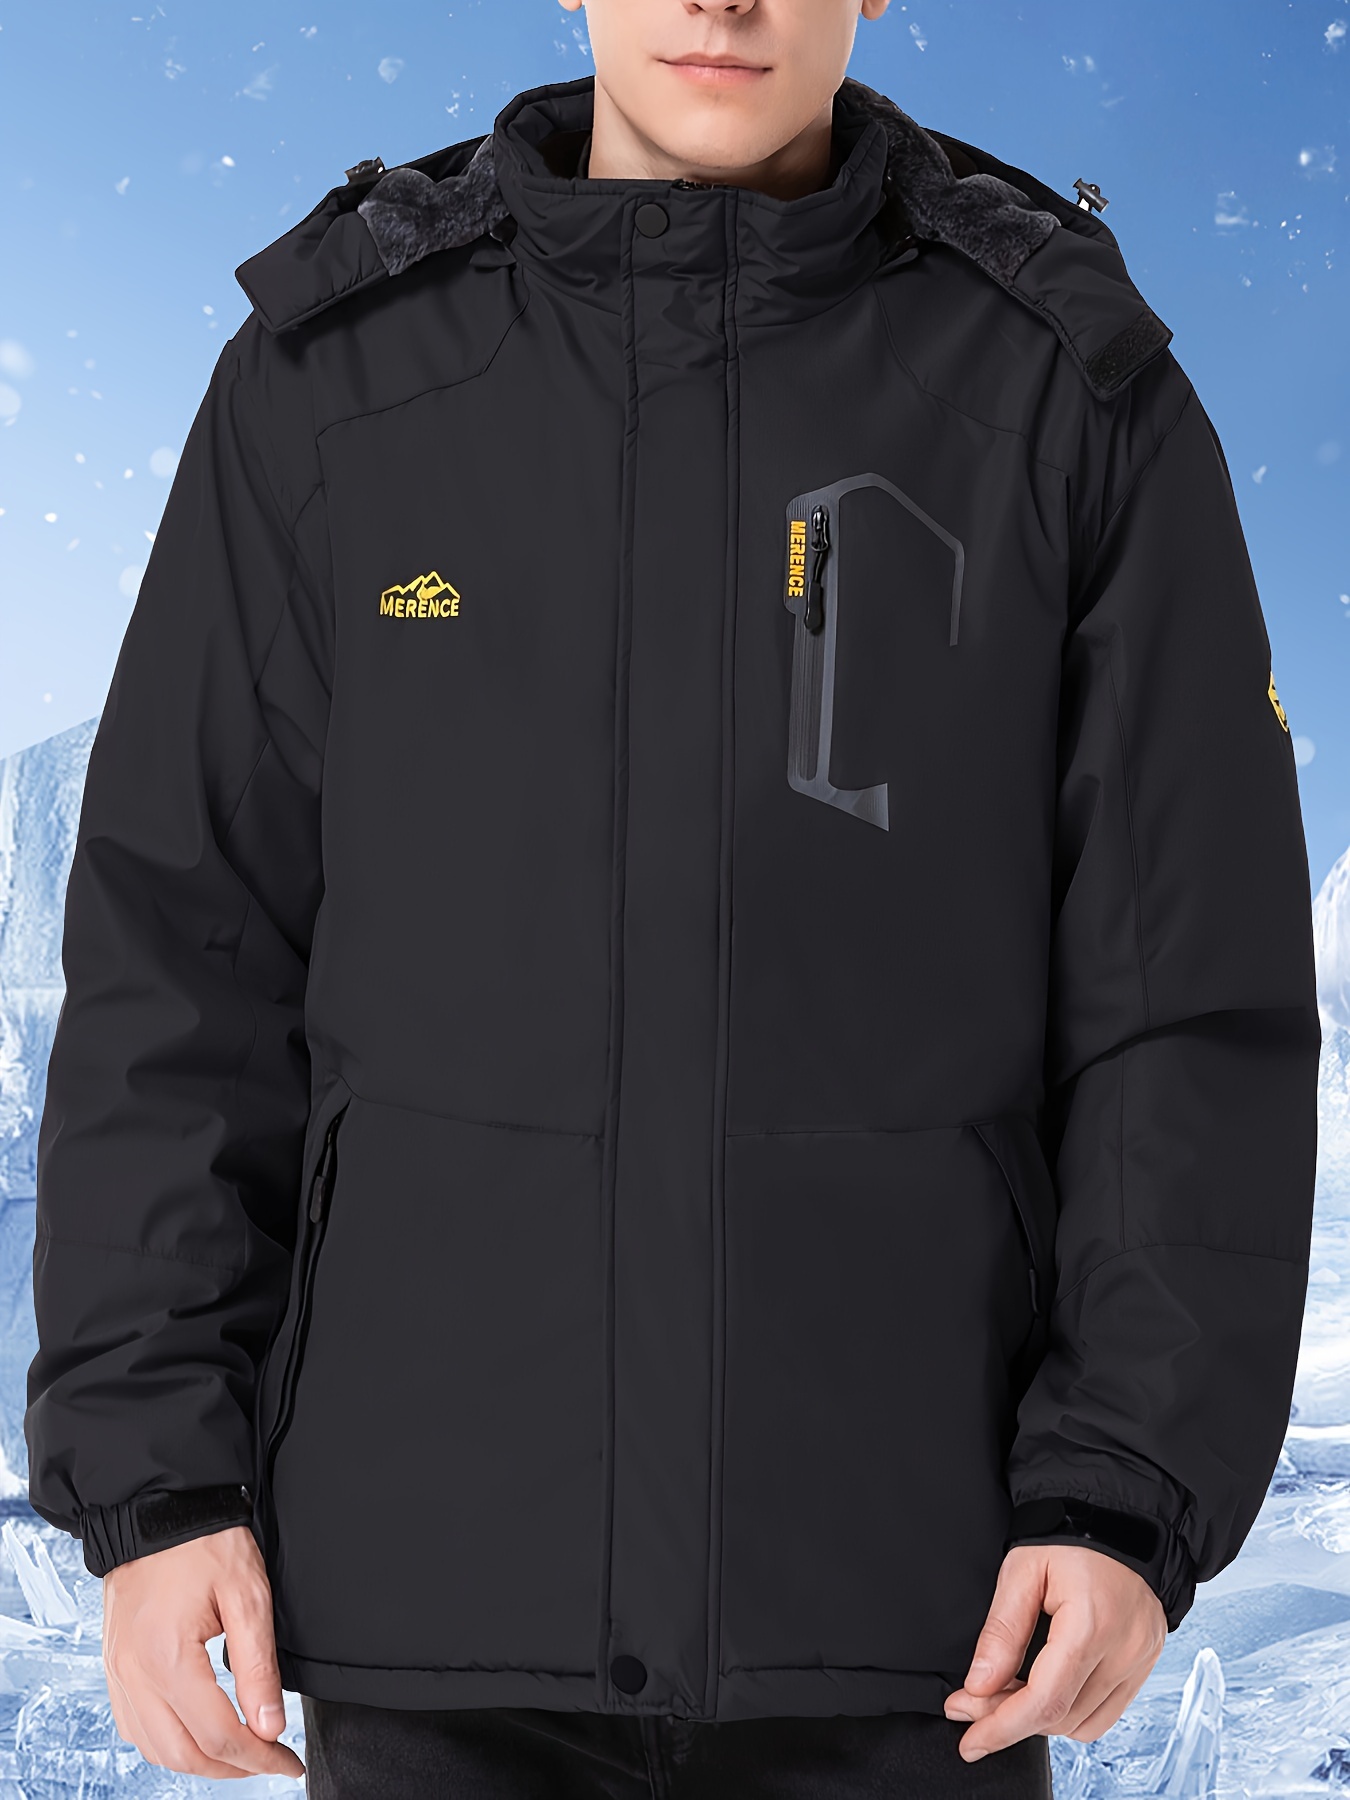 Wantdo Women's Outdoor Waterproof Mountain Ski Jacket Winter Snow Rain Coat  Red & Gray S 